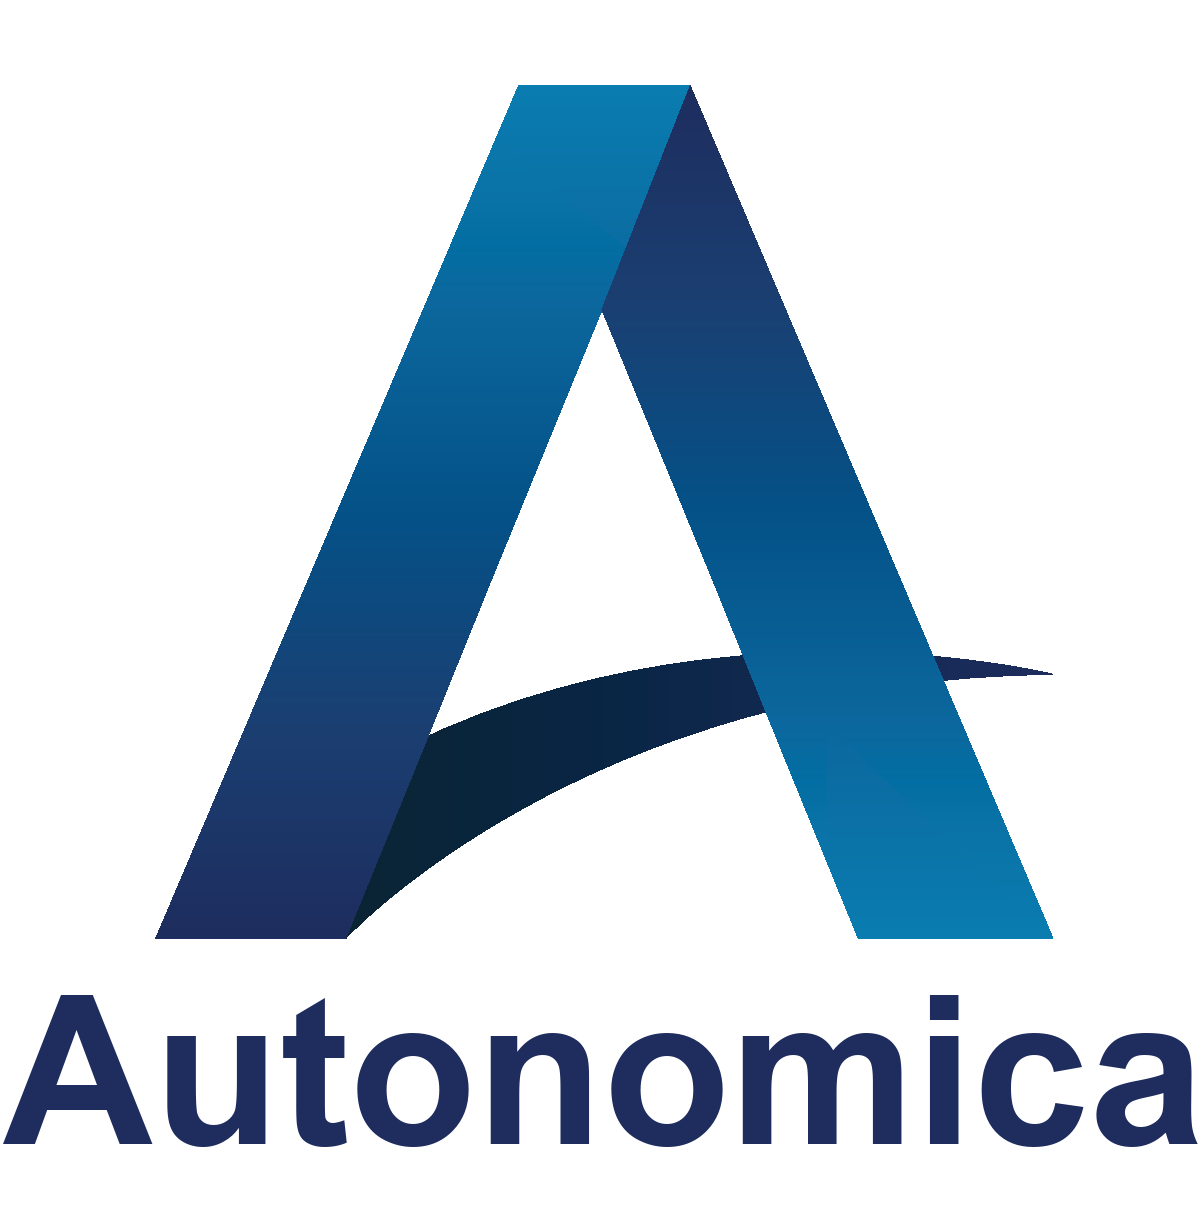 Autonomica: Ontological Modeling and Analysis of Autonomous Behavior feature image